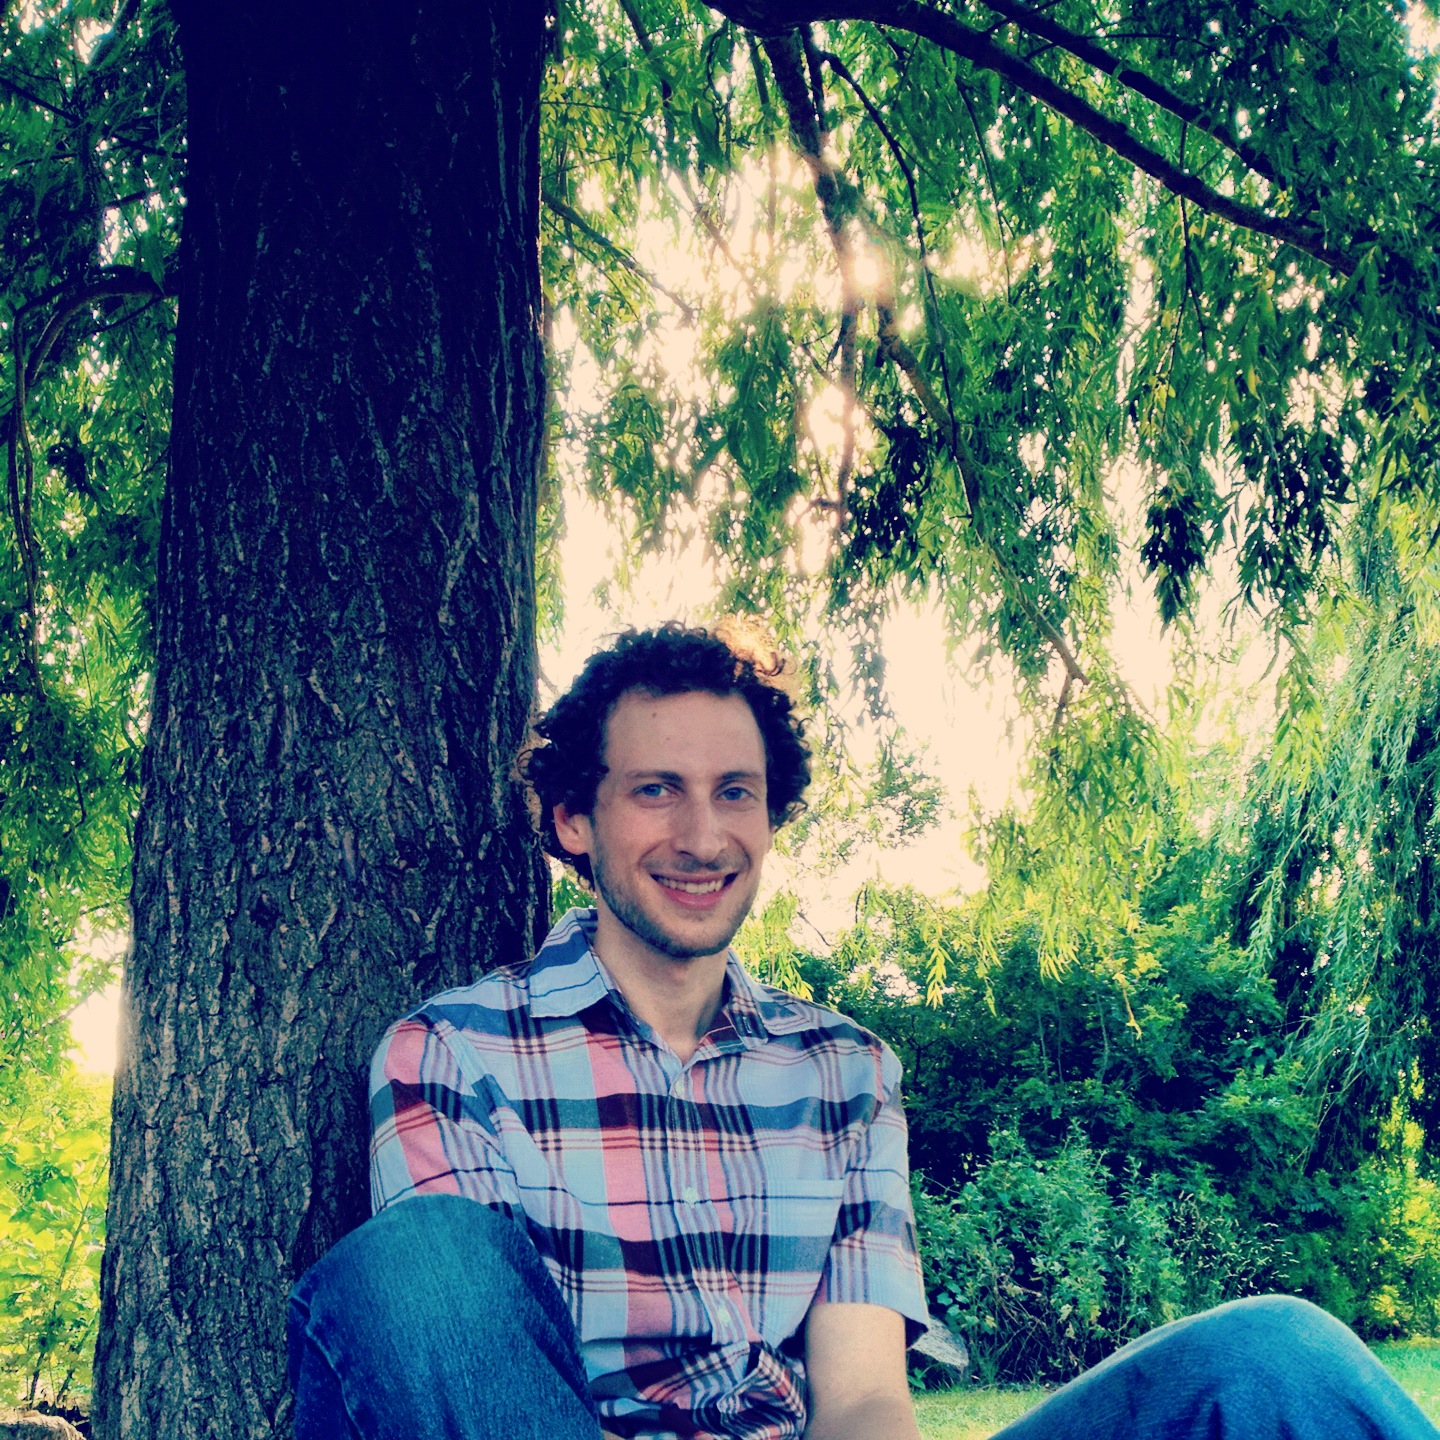 Alex B. under a tree in Penn Treaty Park.